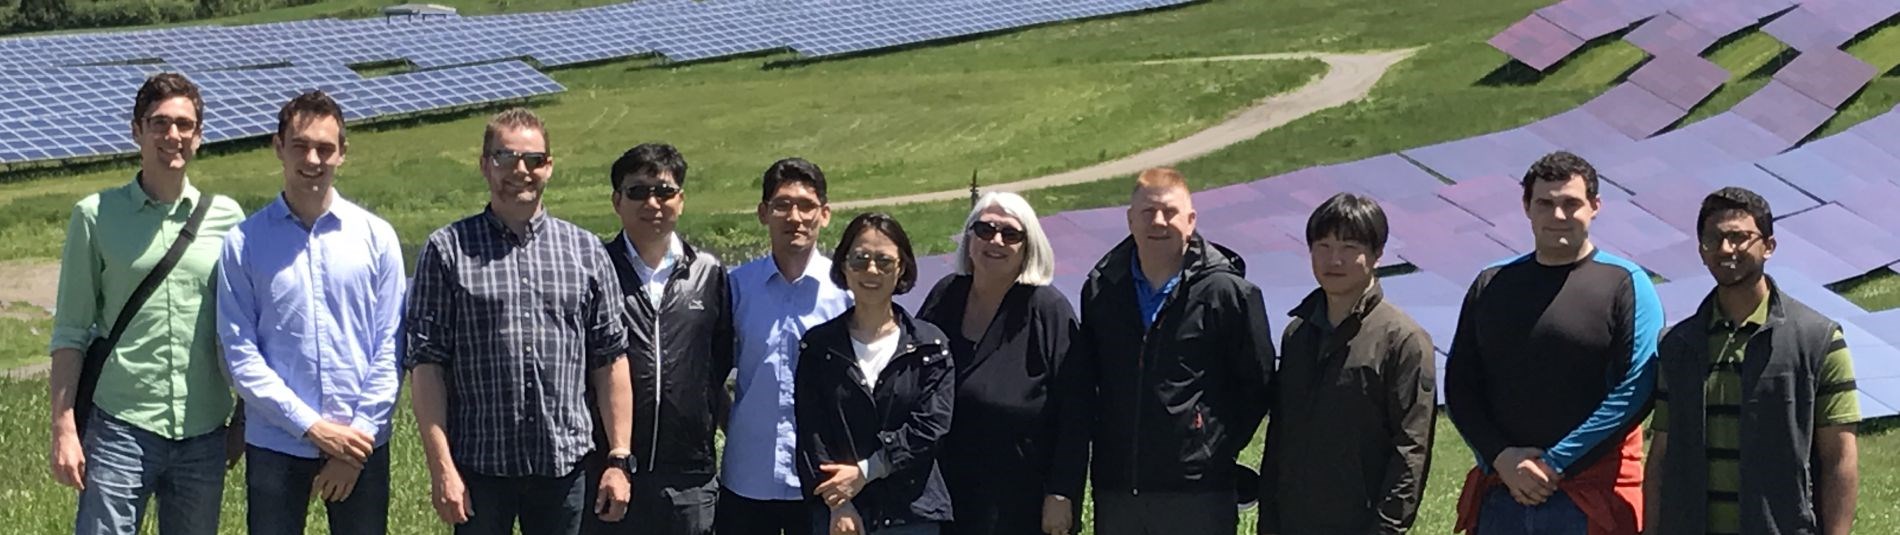 South Korea Power Utility staff visiting Lily Lake Solar Farm